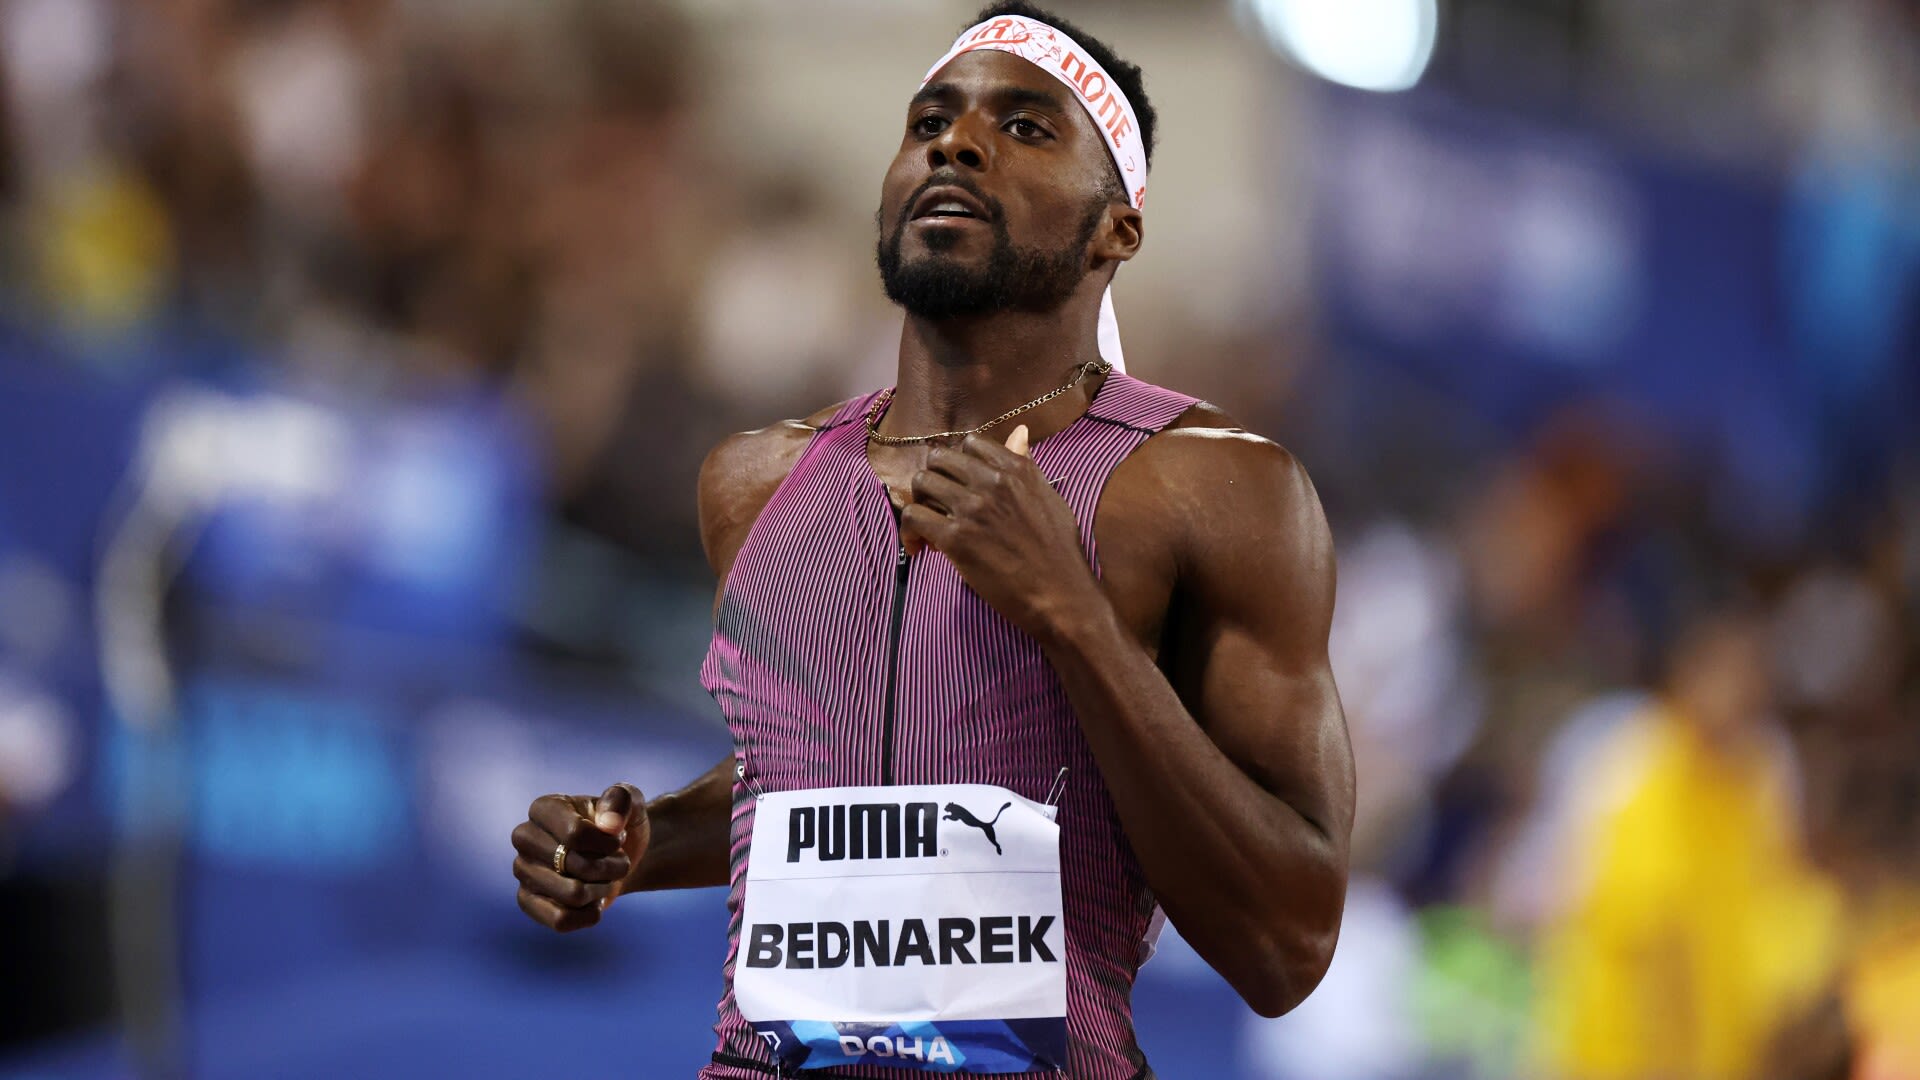 Kenny Bednarek wins Doha 200m in personal best as Olympic Trials showdown nears